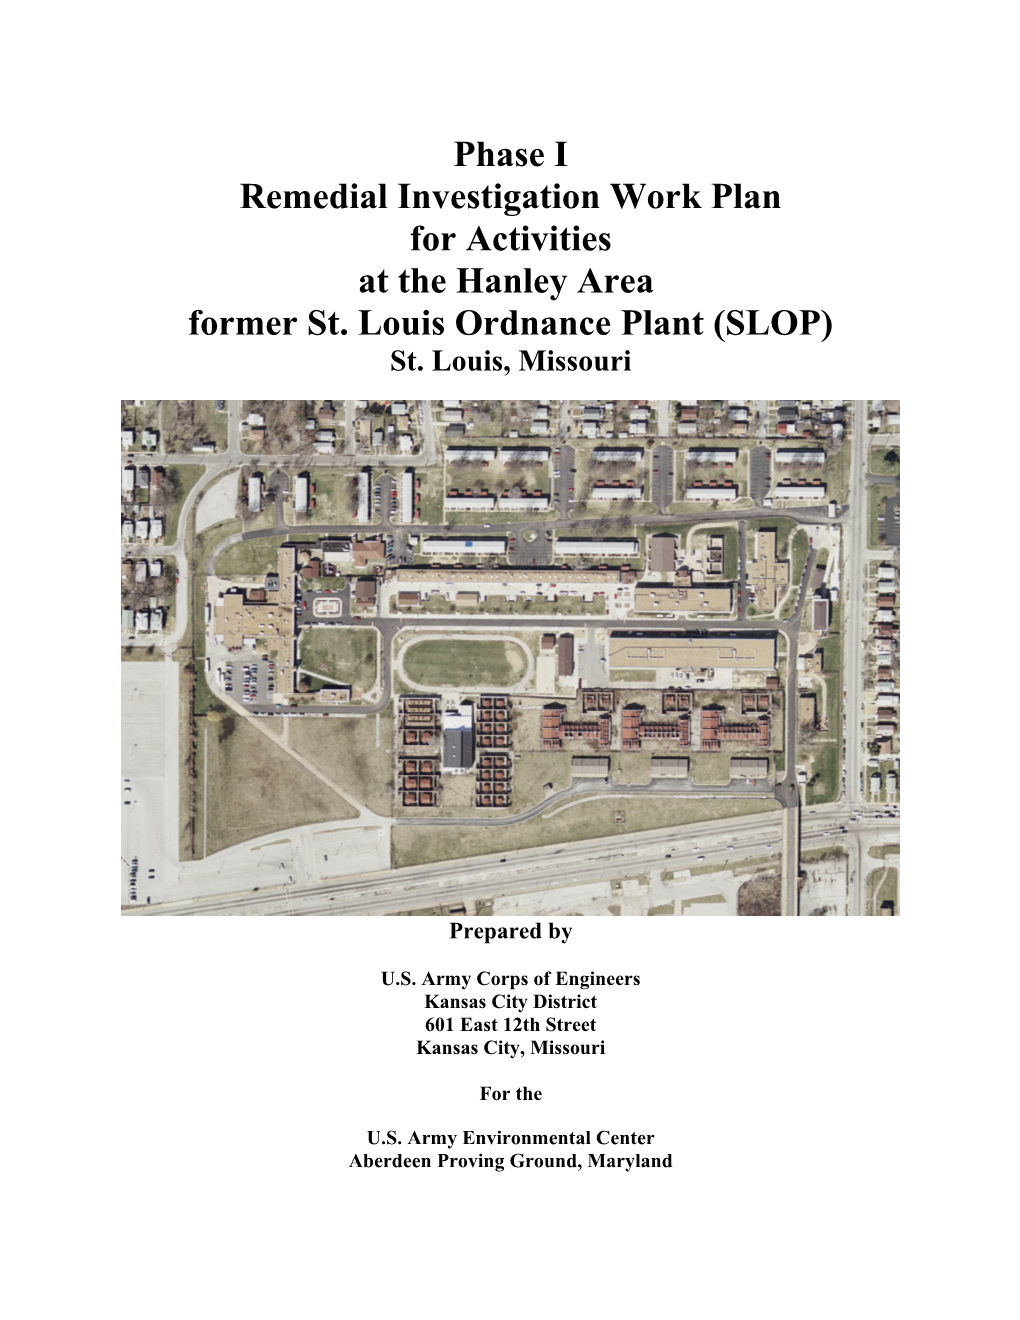 Remedial Investigation Work Plan